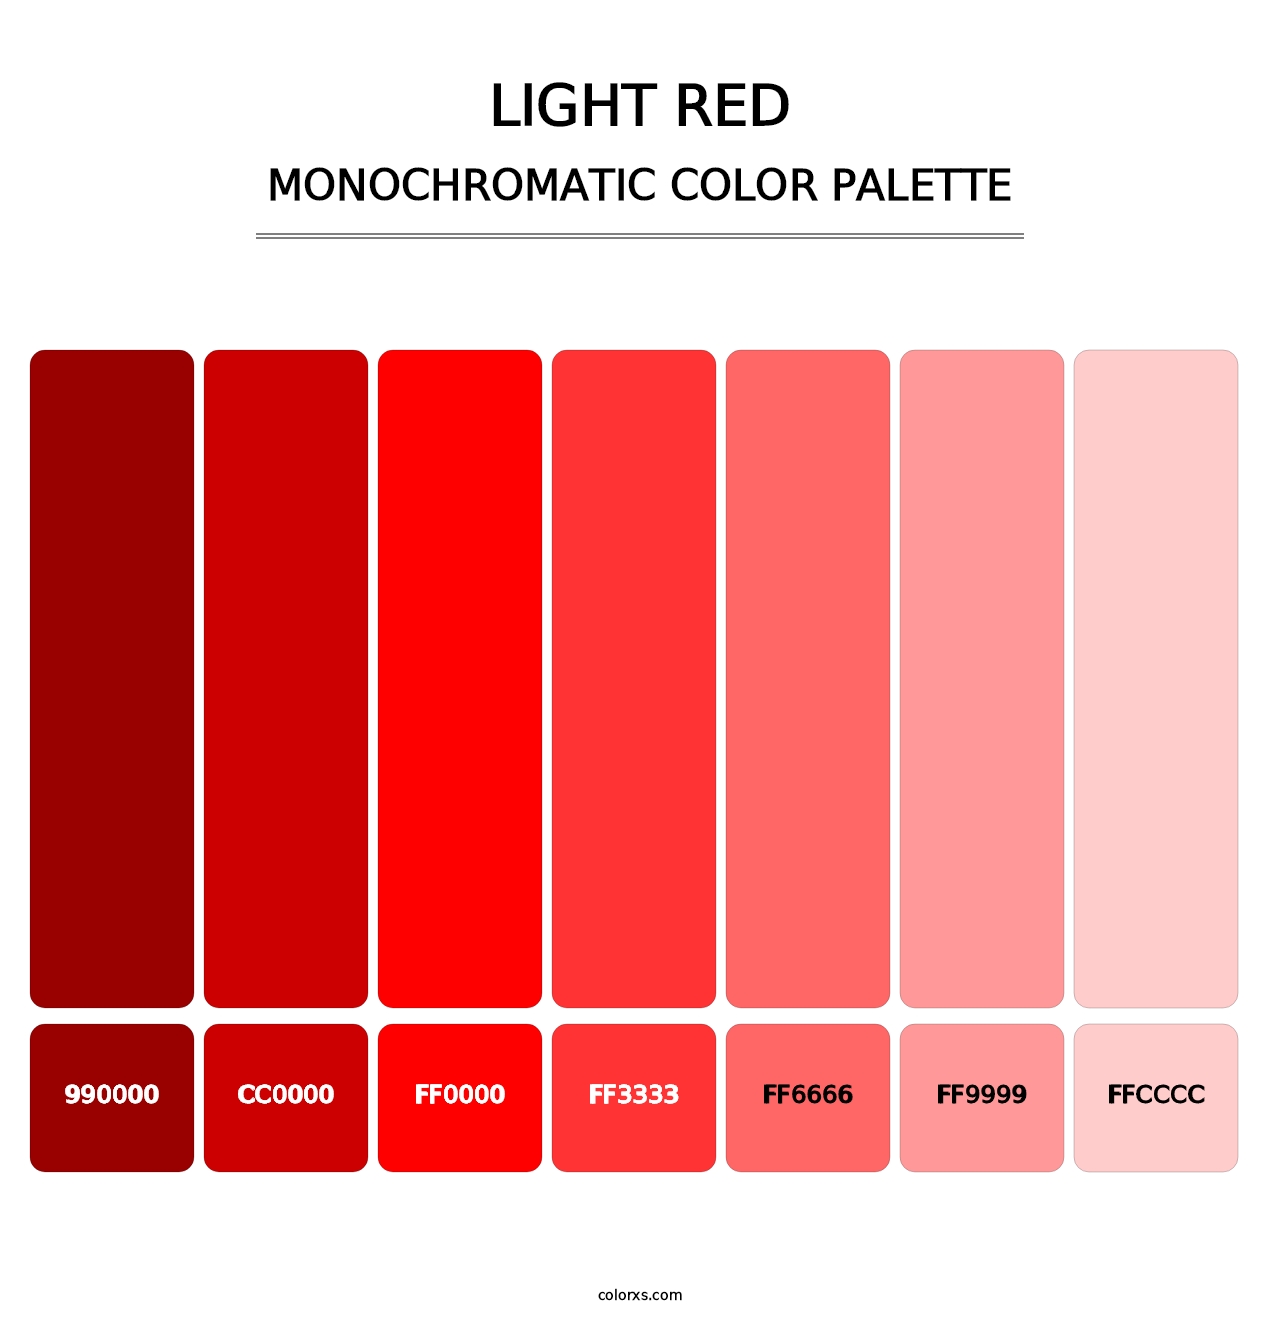 Light Red - Monochromatic Color Palette